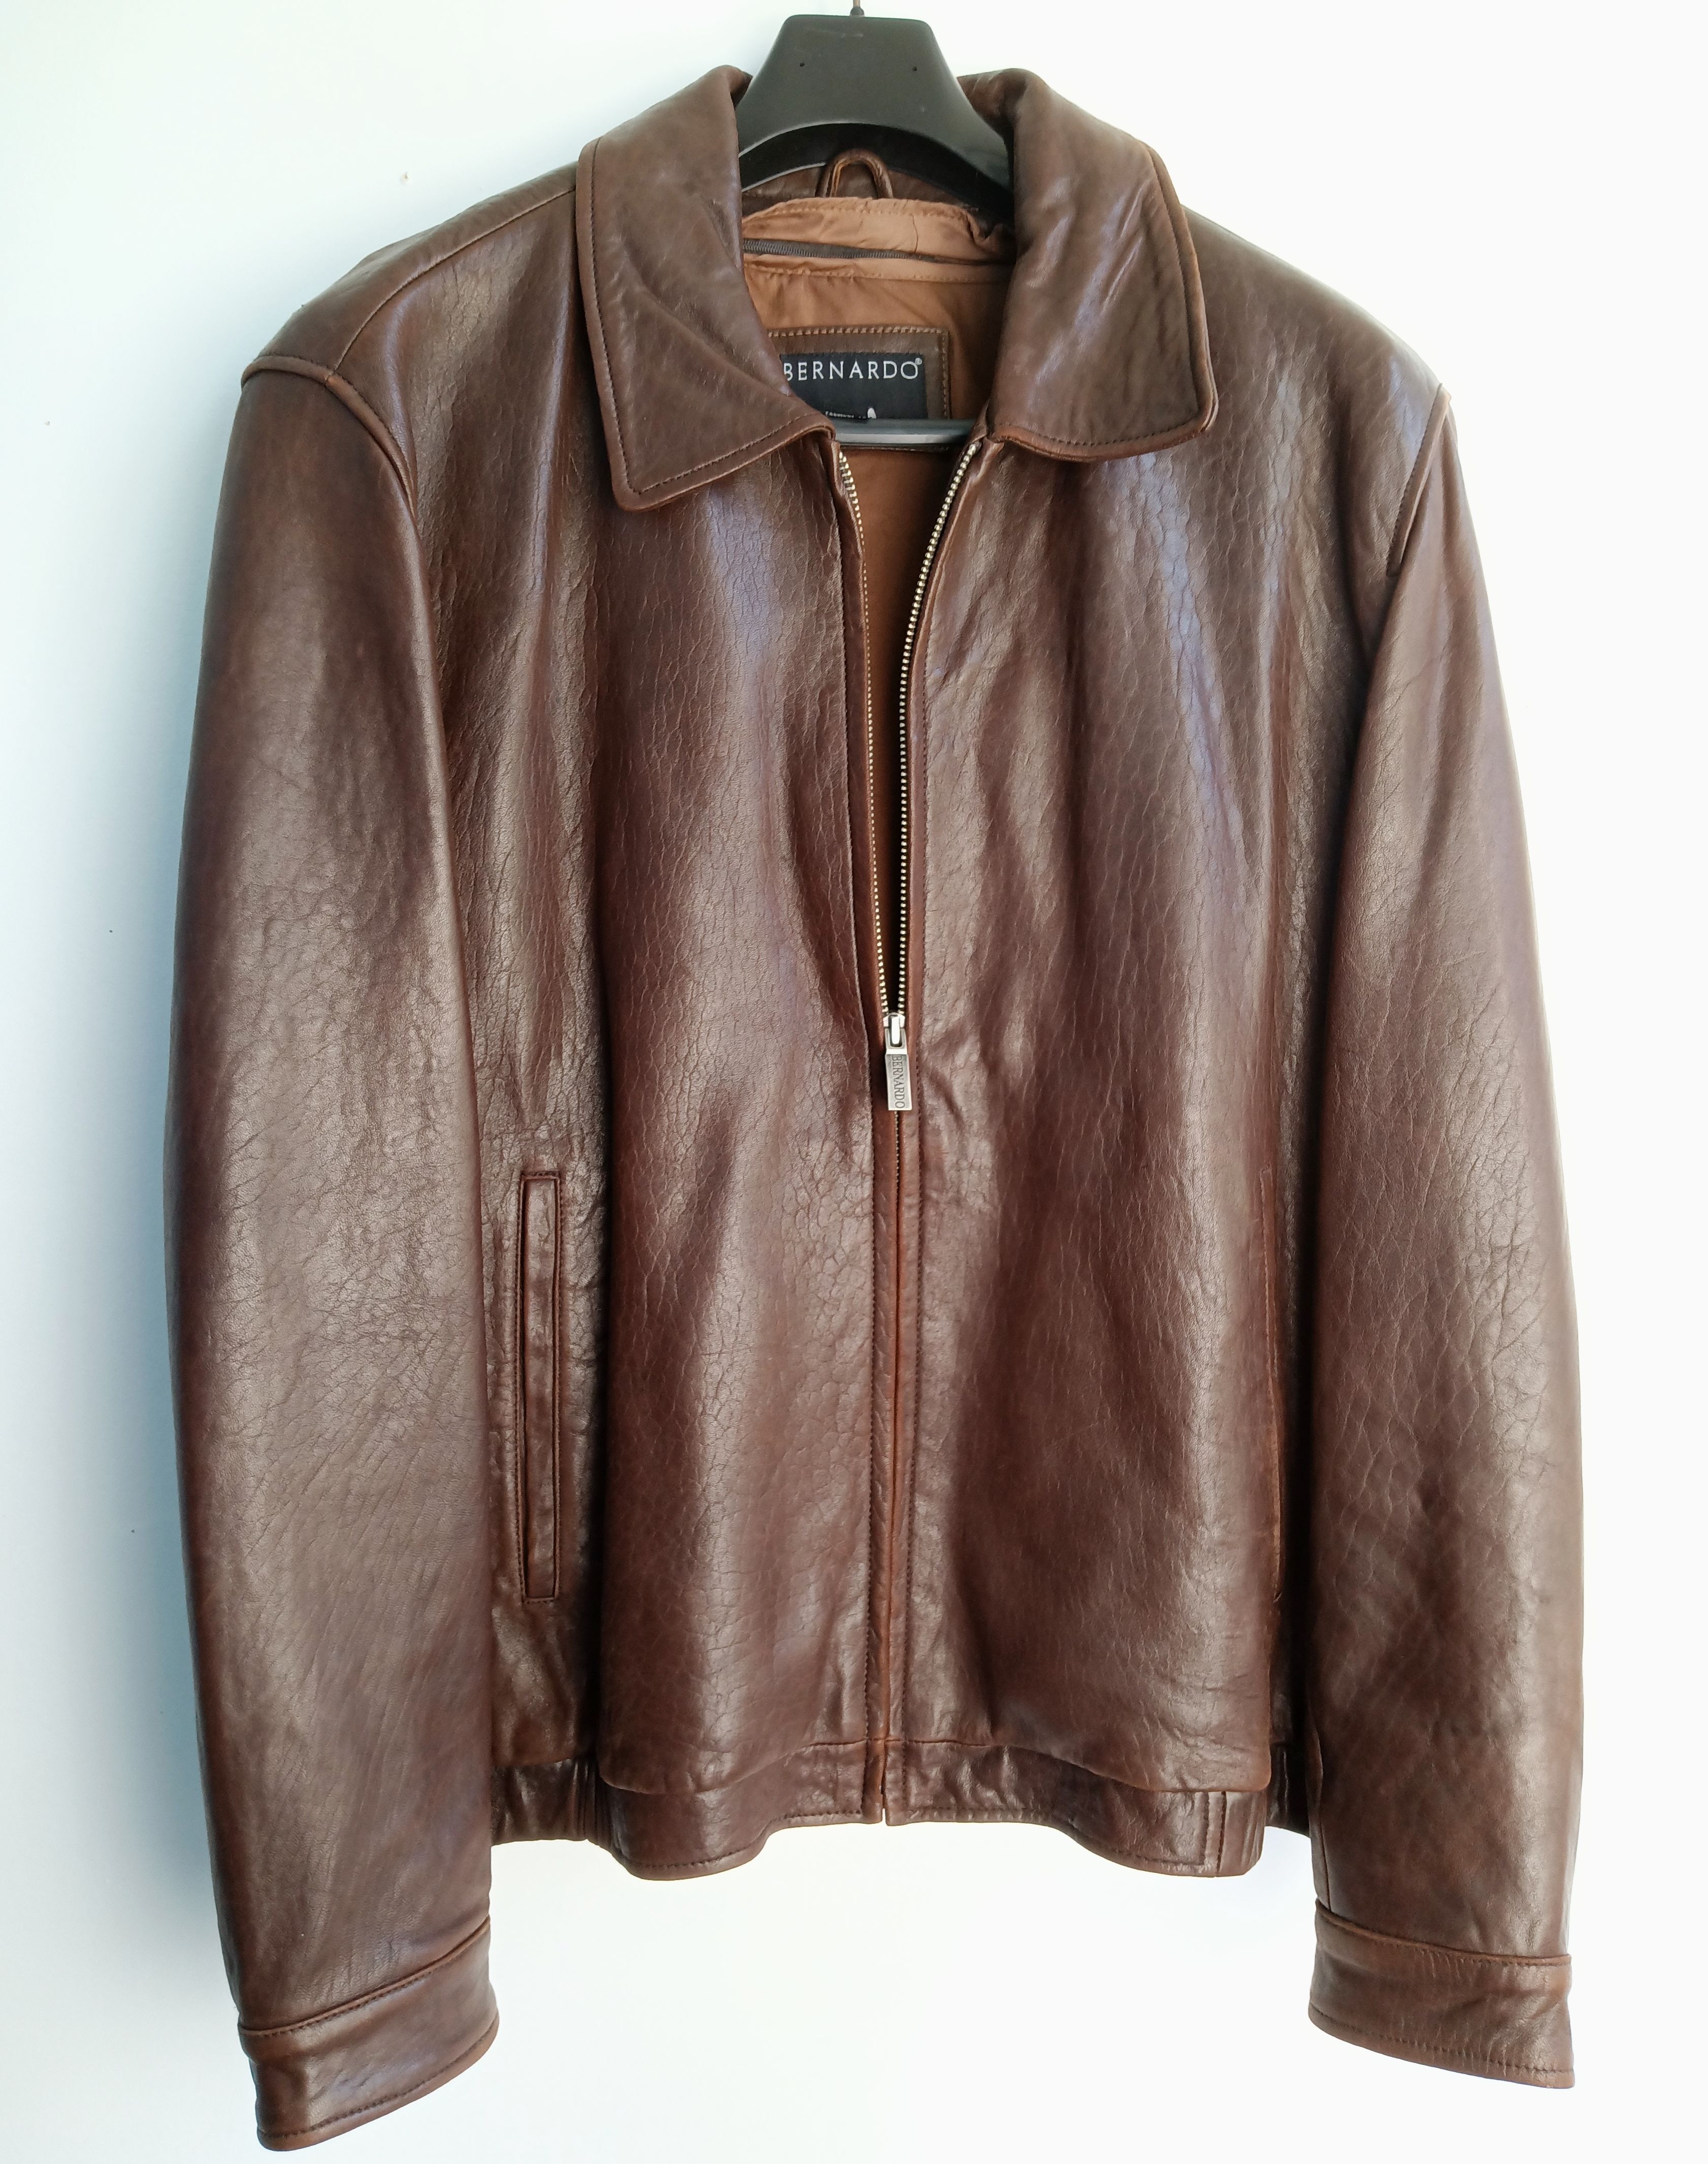 Vintage Vintage Bernardo Distressed Leather Bomber Jacket. Size US XL / EU 56 / 4 - 1 Preview